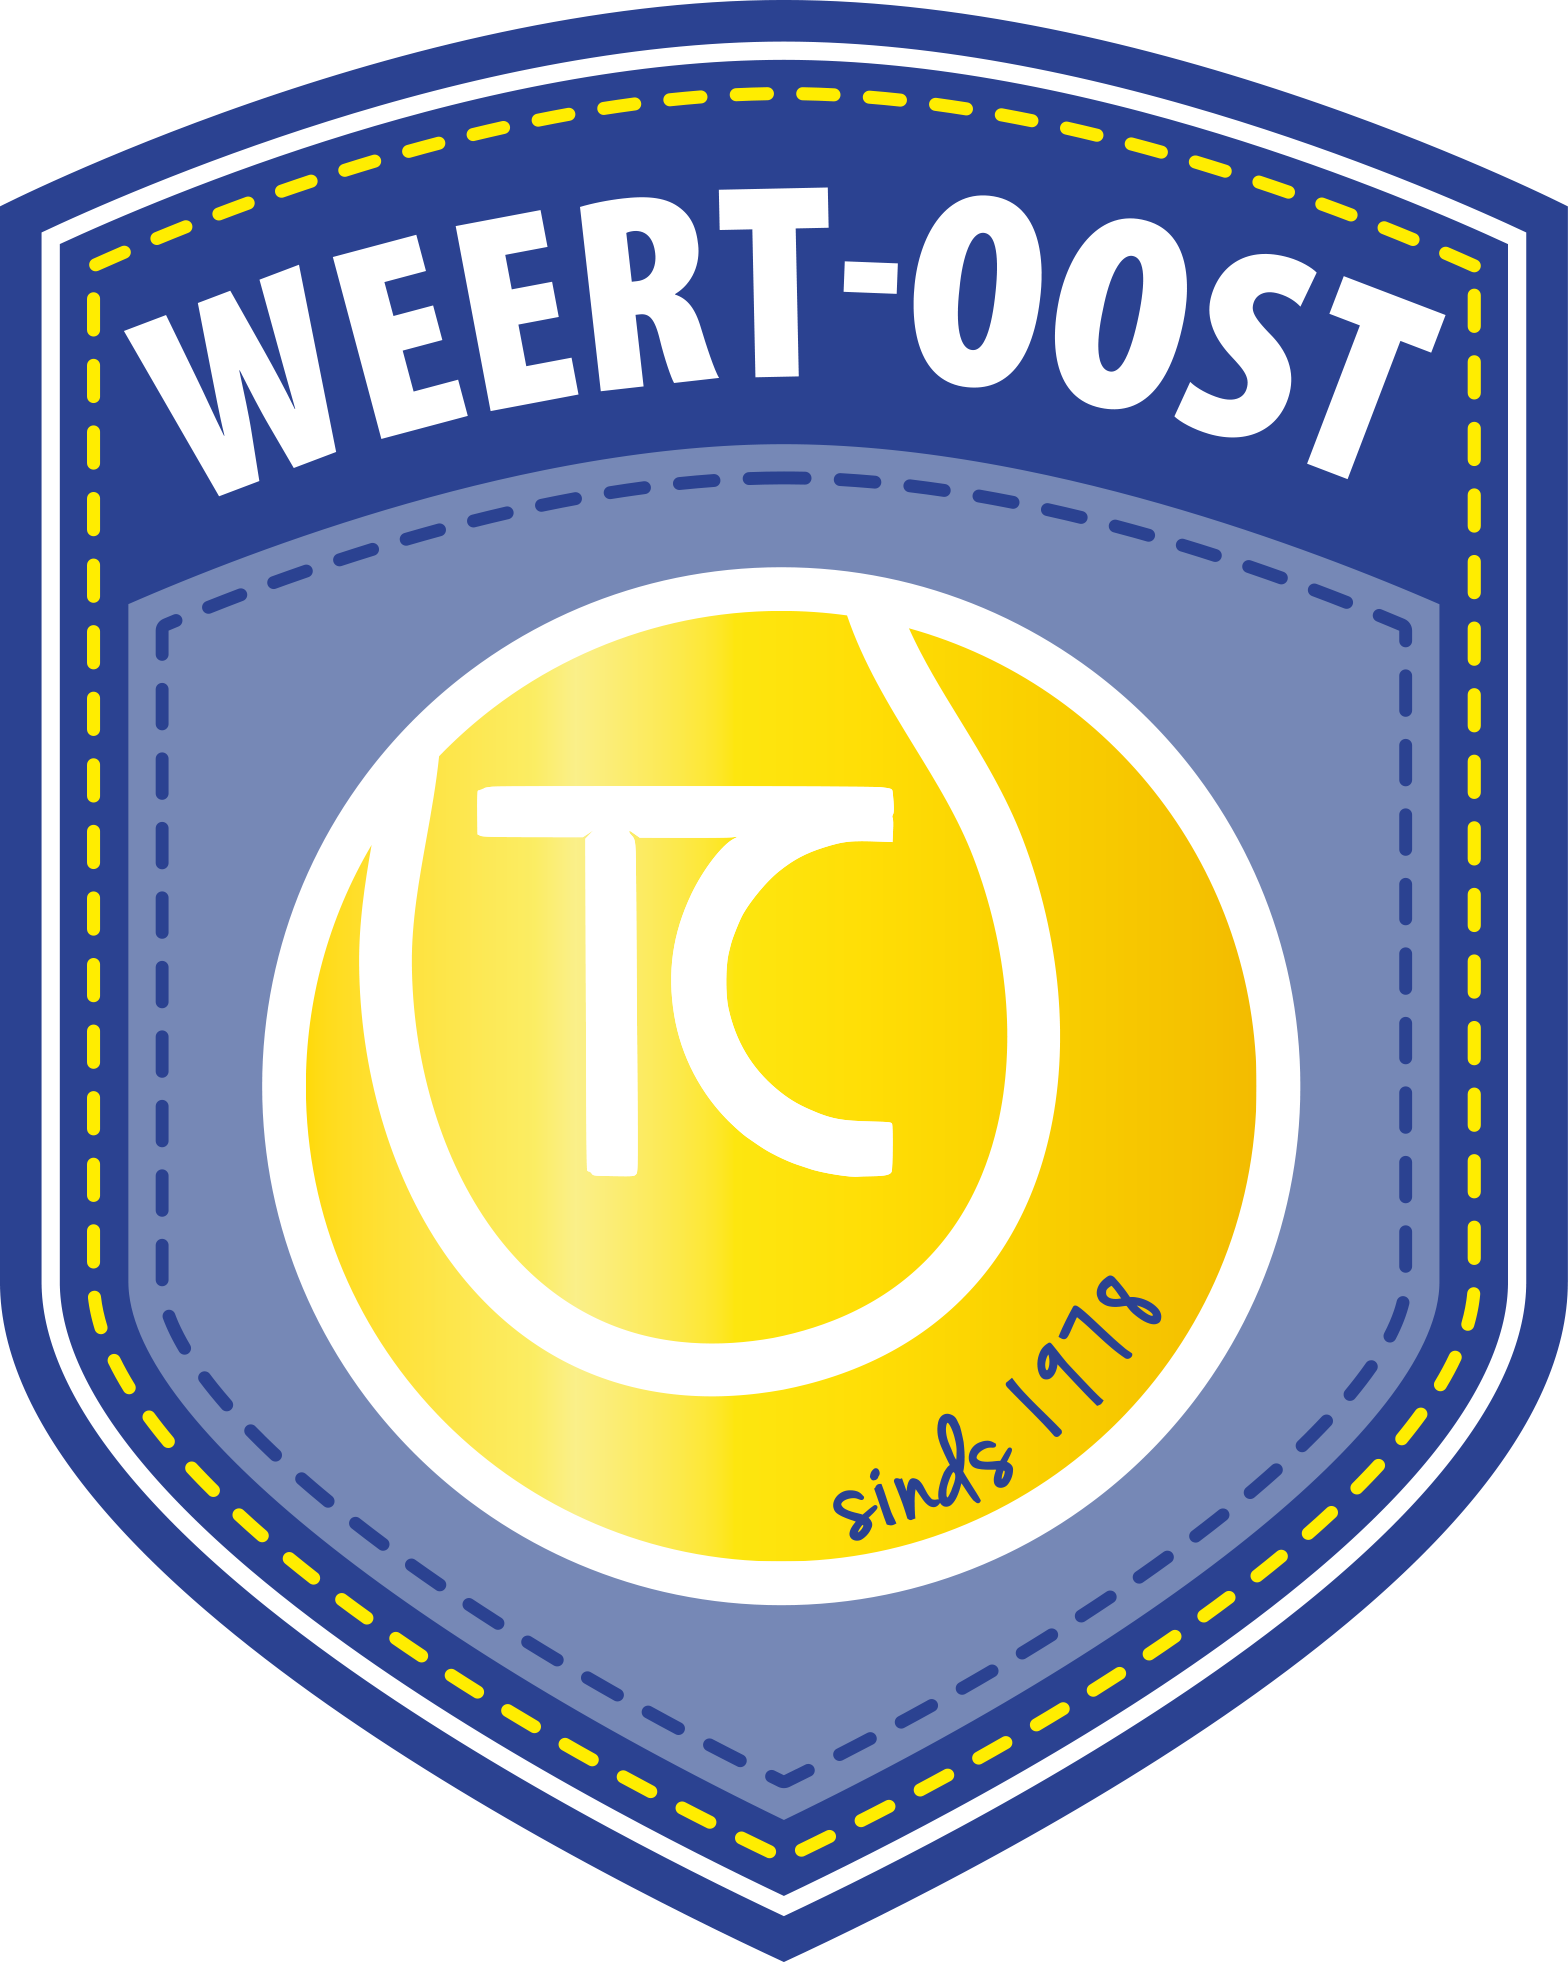 Profile image of venue TC Weert Oost